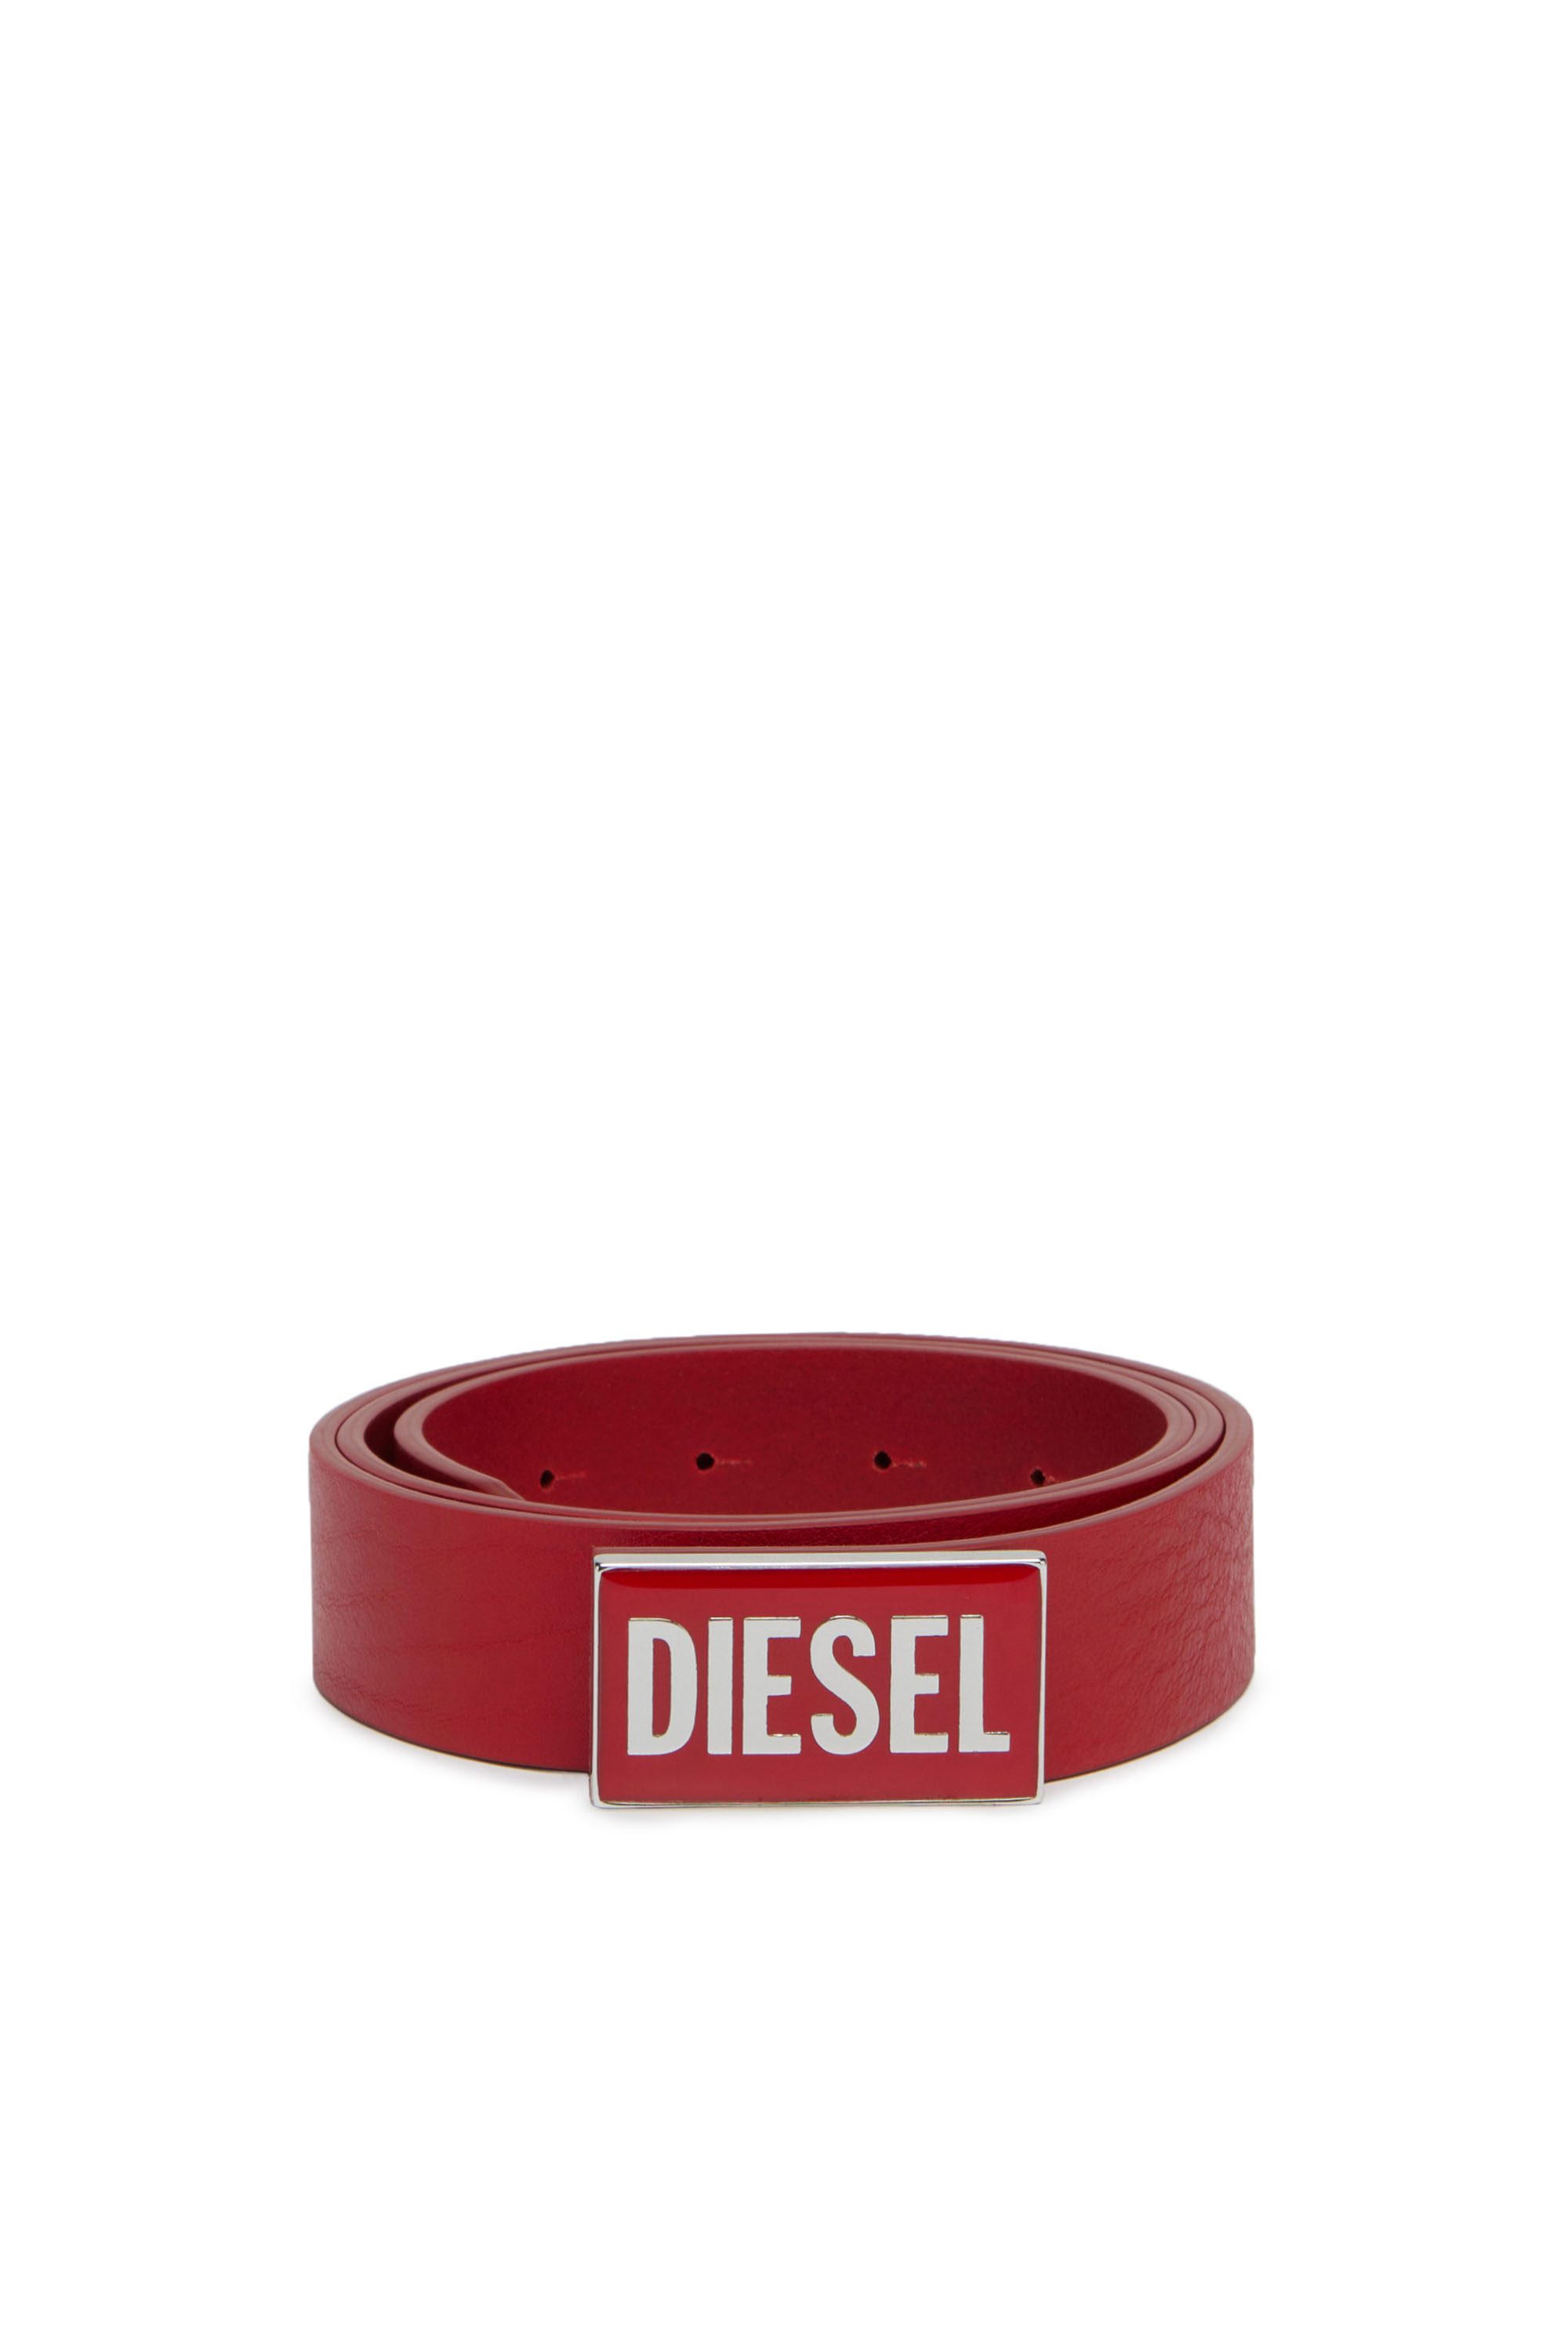 Diesel - B-GLOSSY, Rosso - Image 1